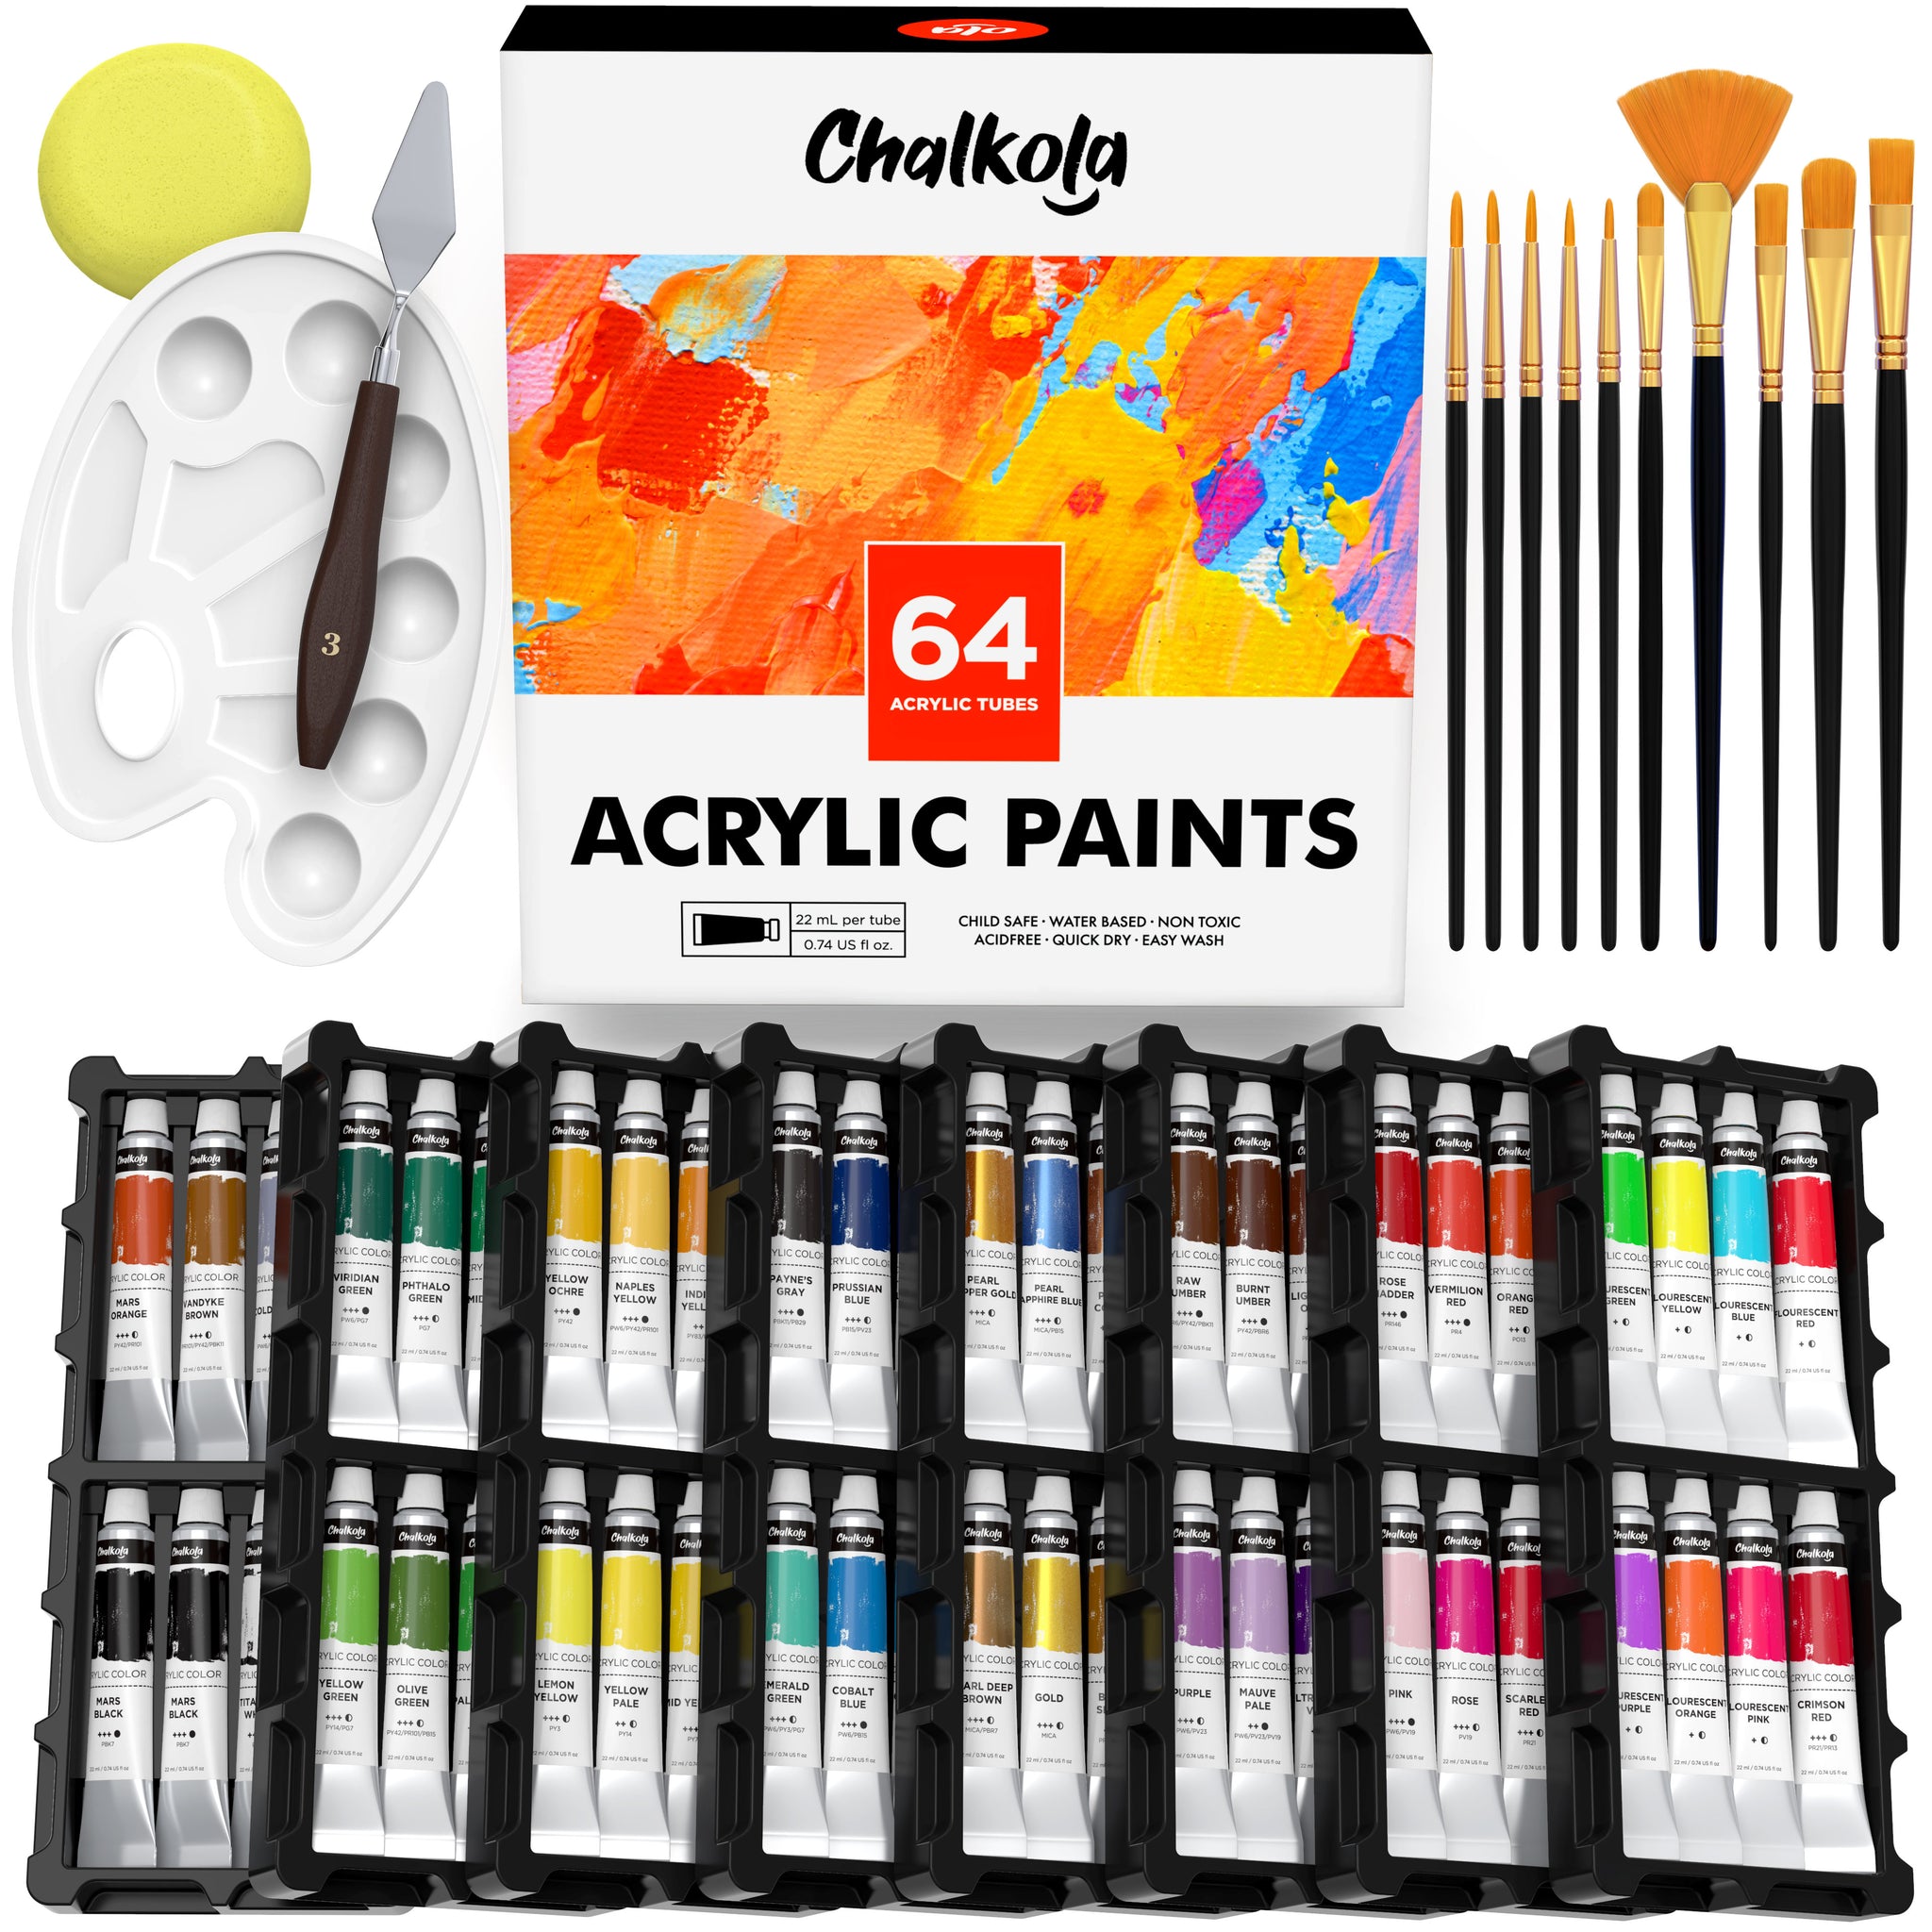  Chalkola Metallic Acrylic Paint Set for Artists, Adults & Kids  - 32 Metallic Paint Tubes (22ml) (incl Gold, Silver), 10 Painting Brushes,  1 Knife, 1 Sponge & 1 Palette - Metalic